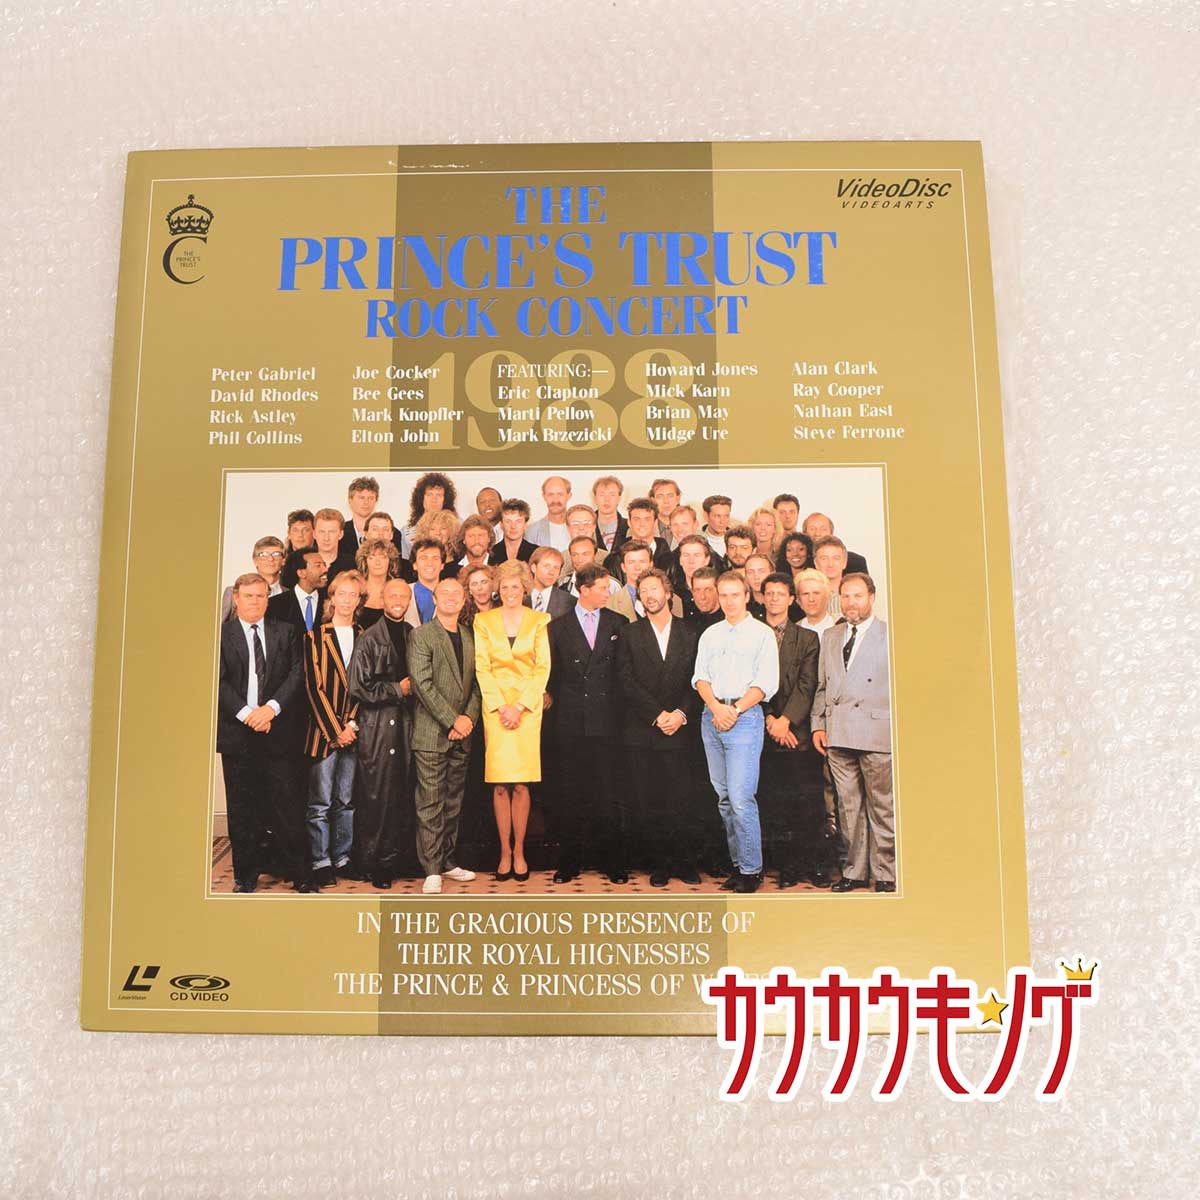 šLD /졼ǥ THE PRINCE'S TRUST ROCK CONCERT 1988